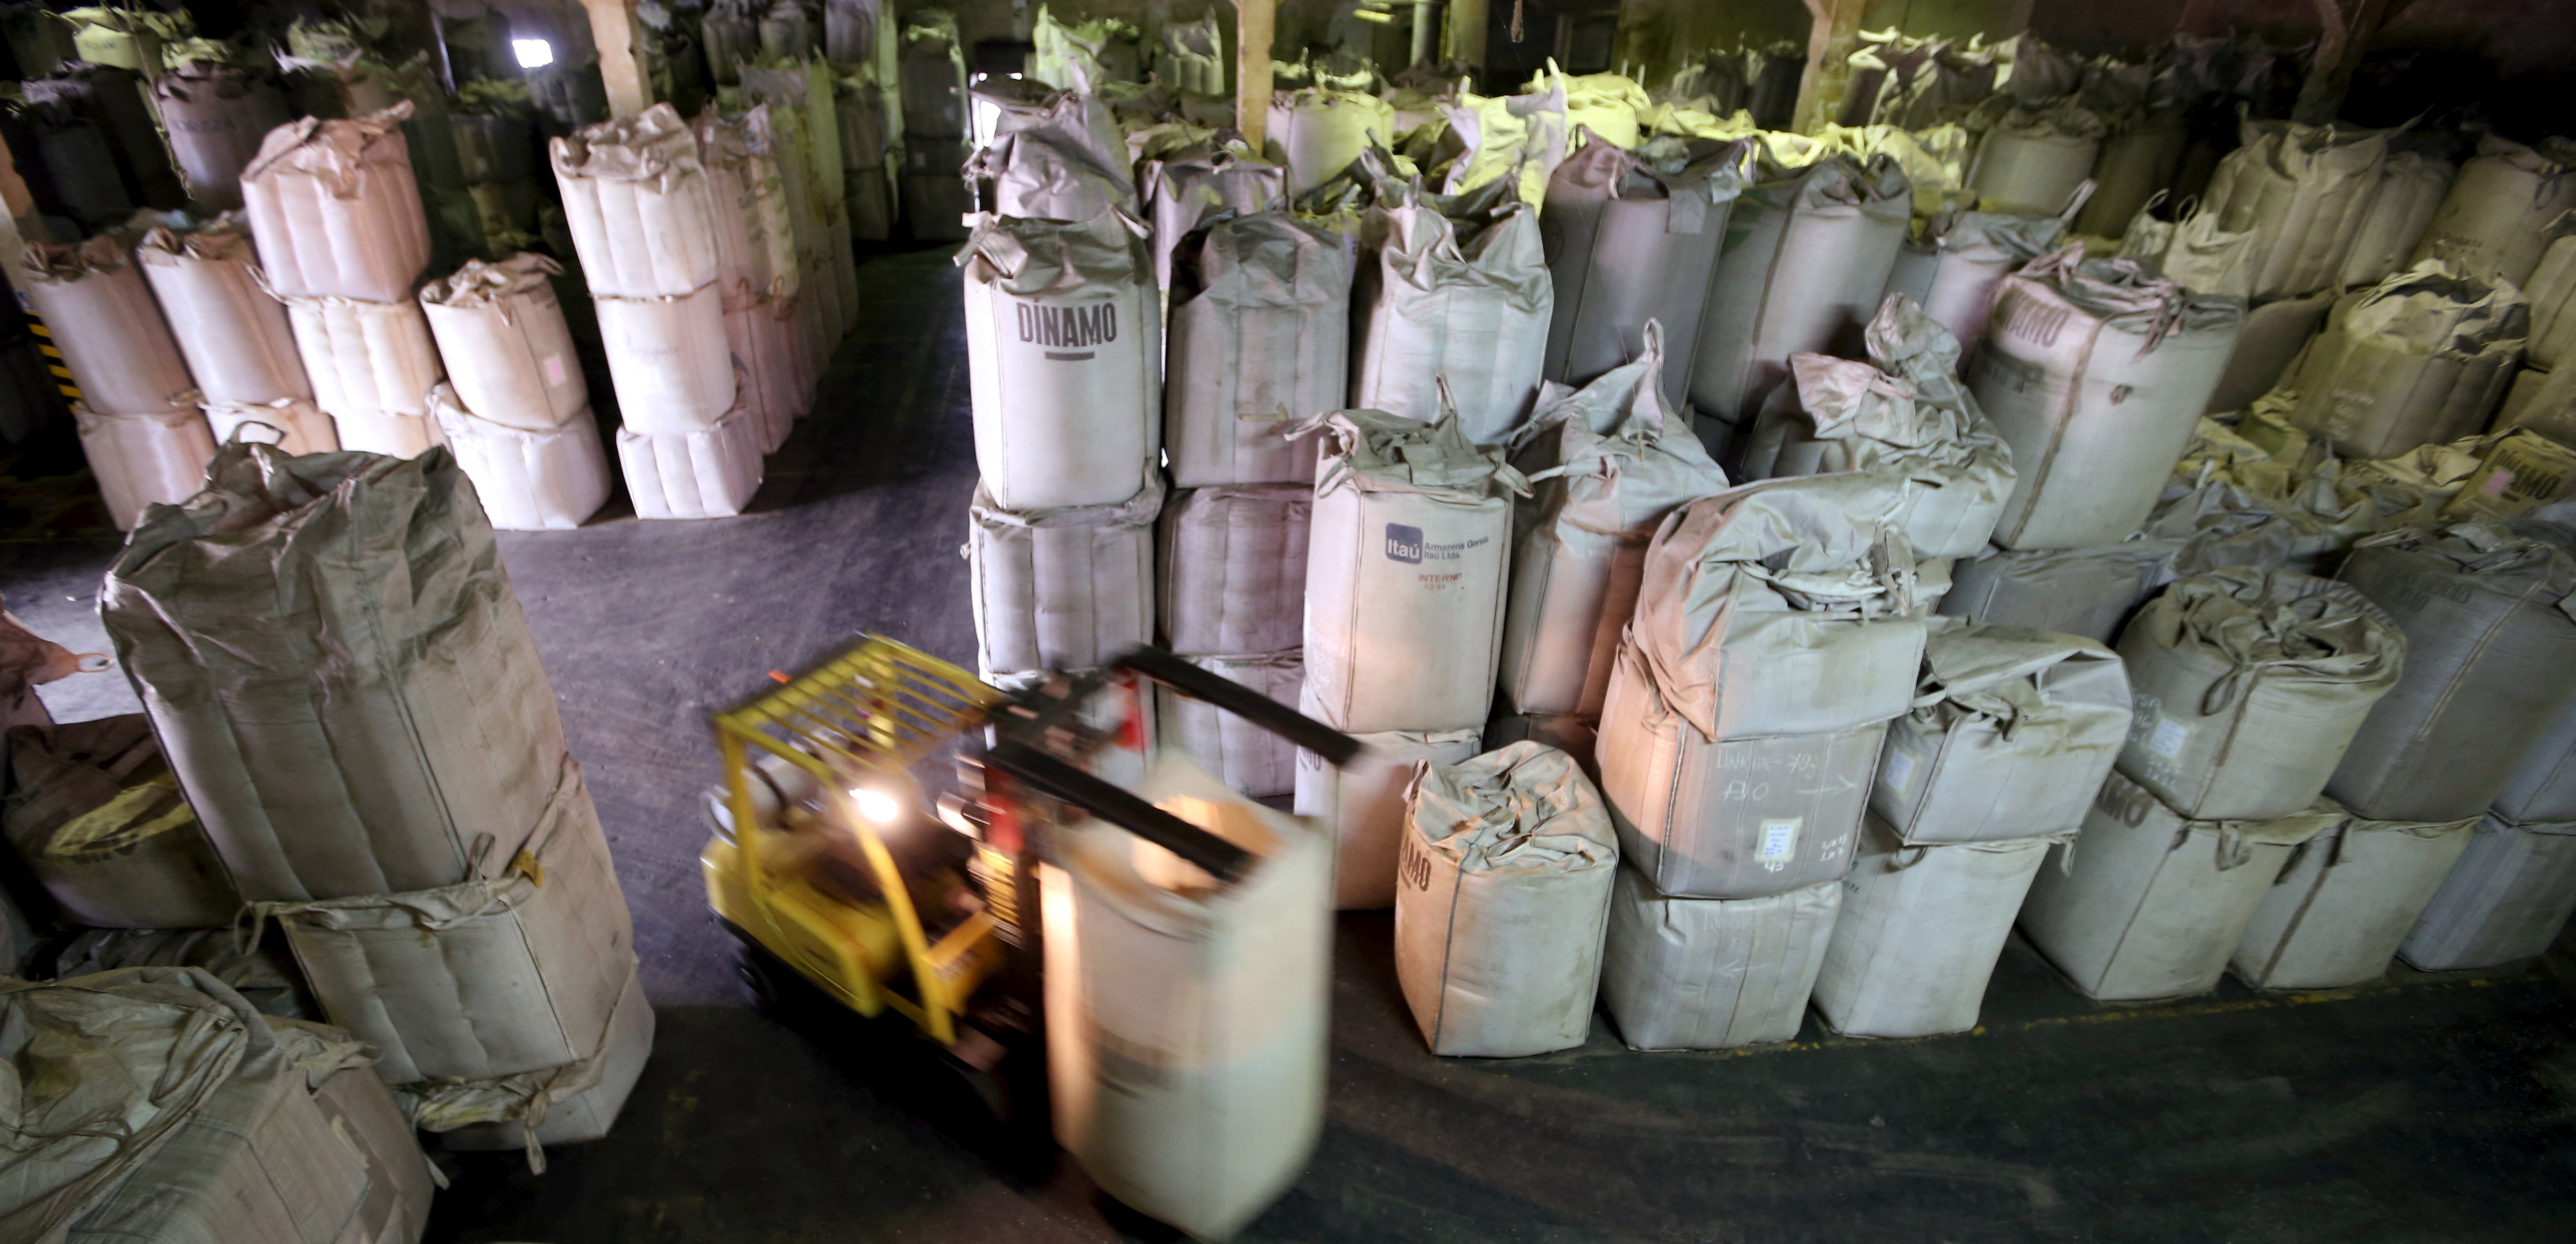 Conillon highs worry Brazilian coffee industry - SAFRAS & Mercado